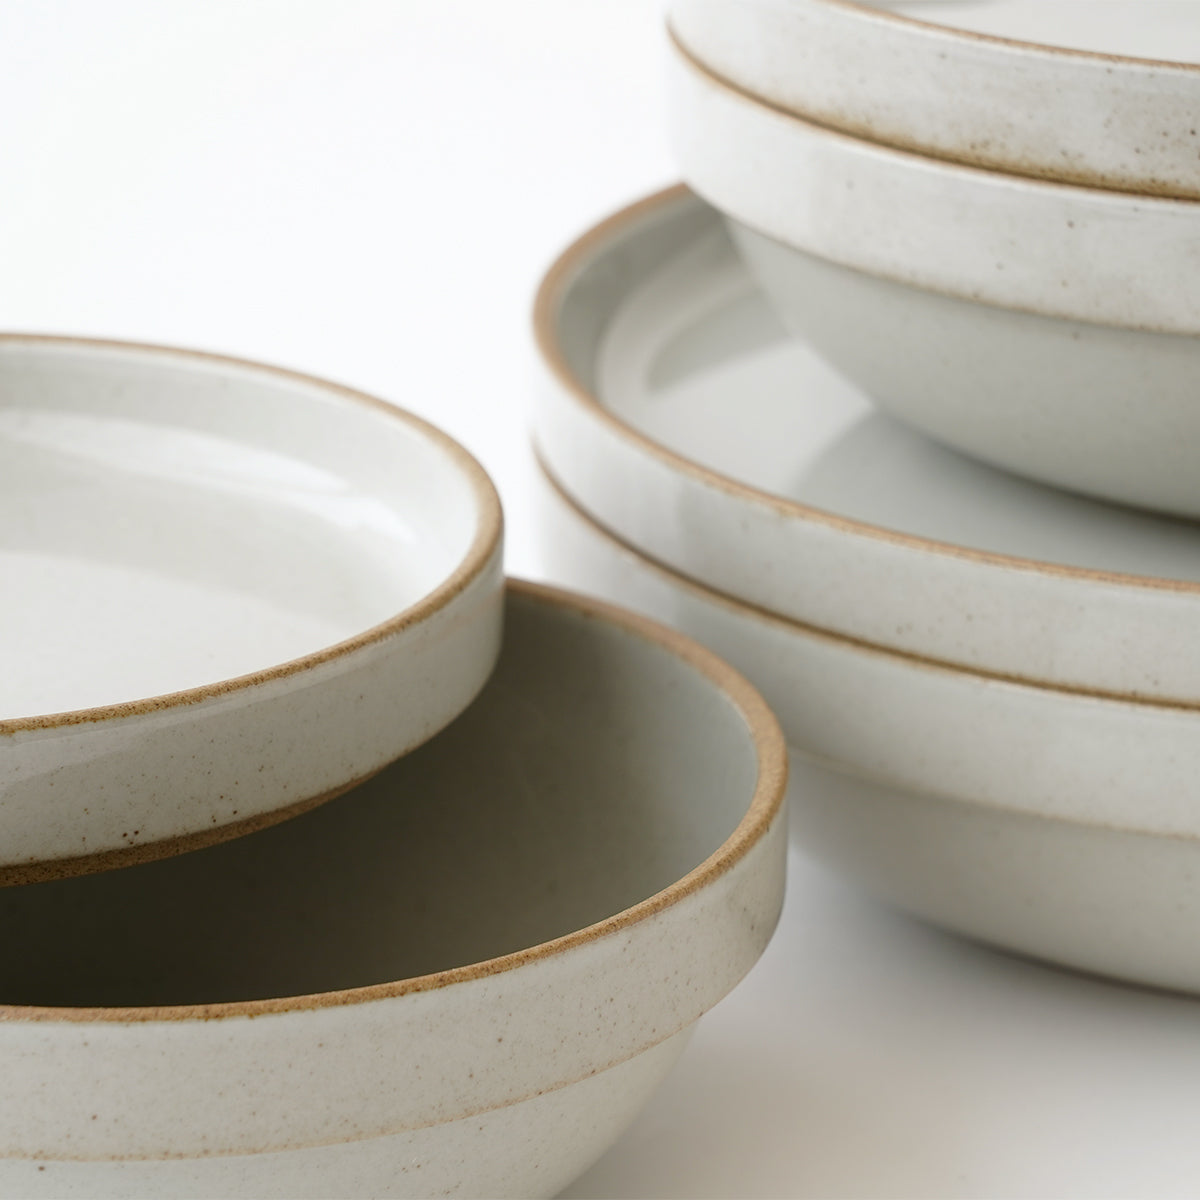 Hasami Porcelain Plate 7 3/8" Gloss Gray